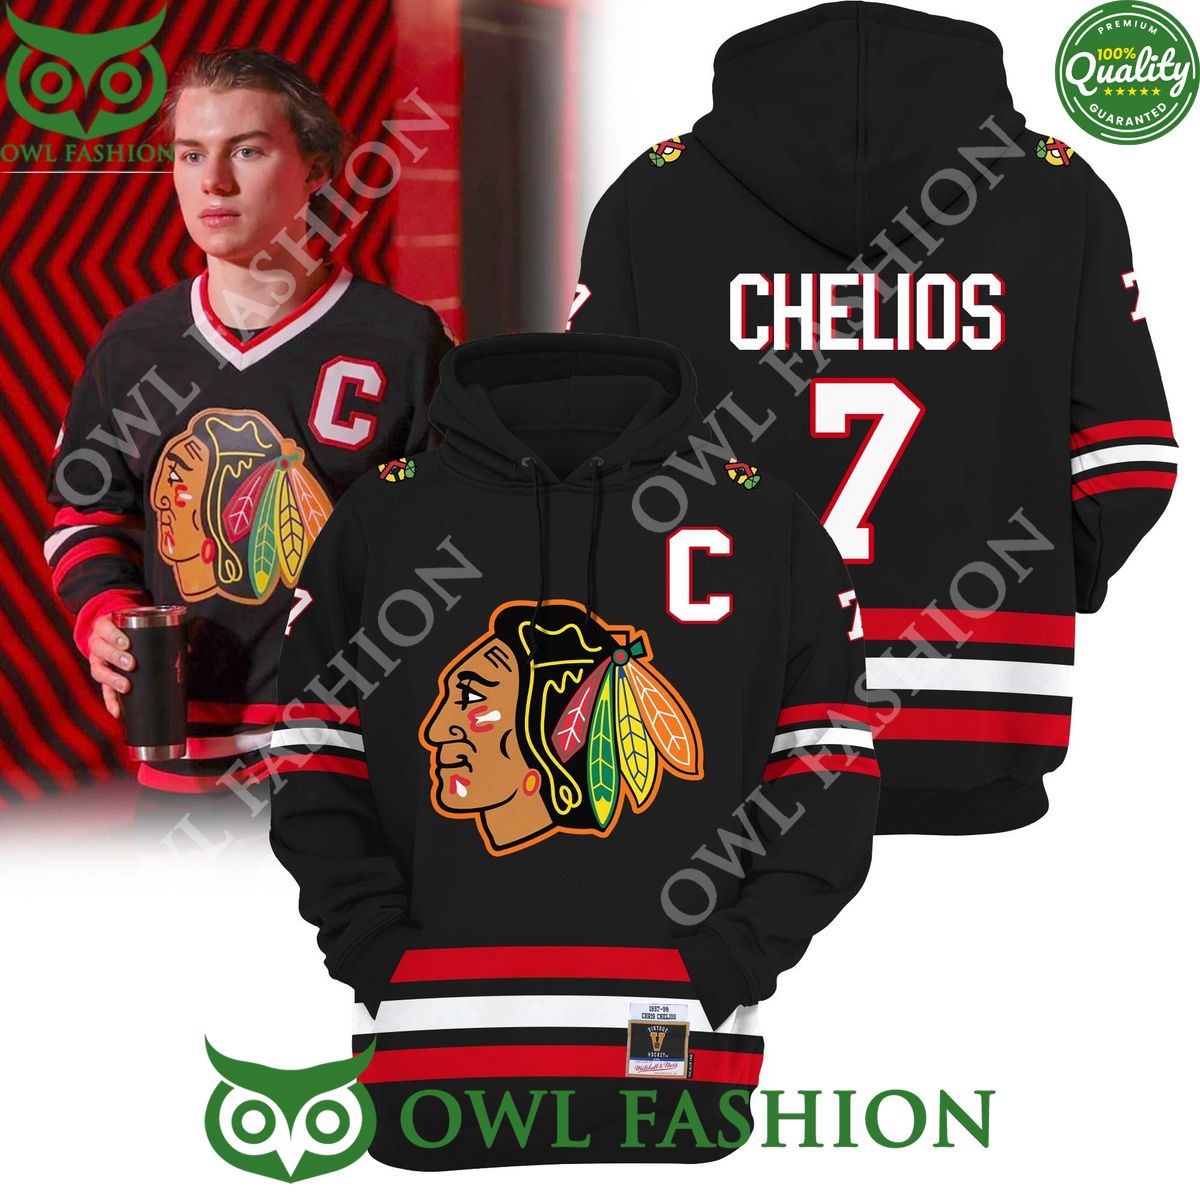 NHL Chris Chelios Chicago Blackhawks ice hockey team Hoodie